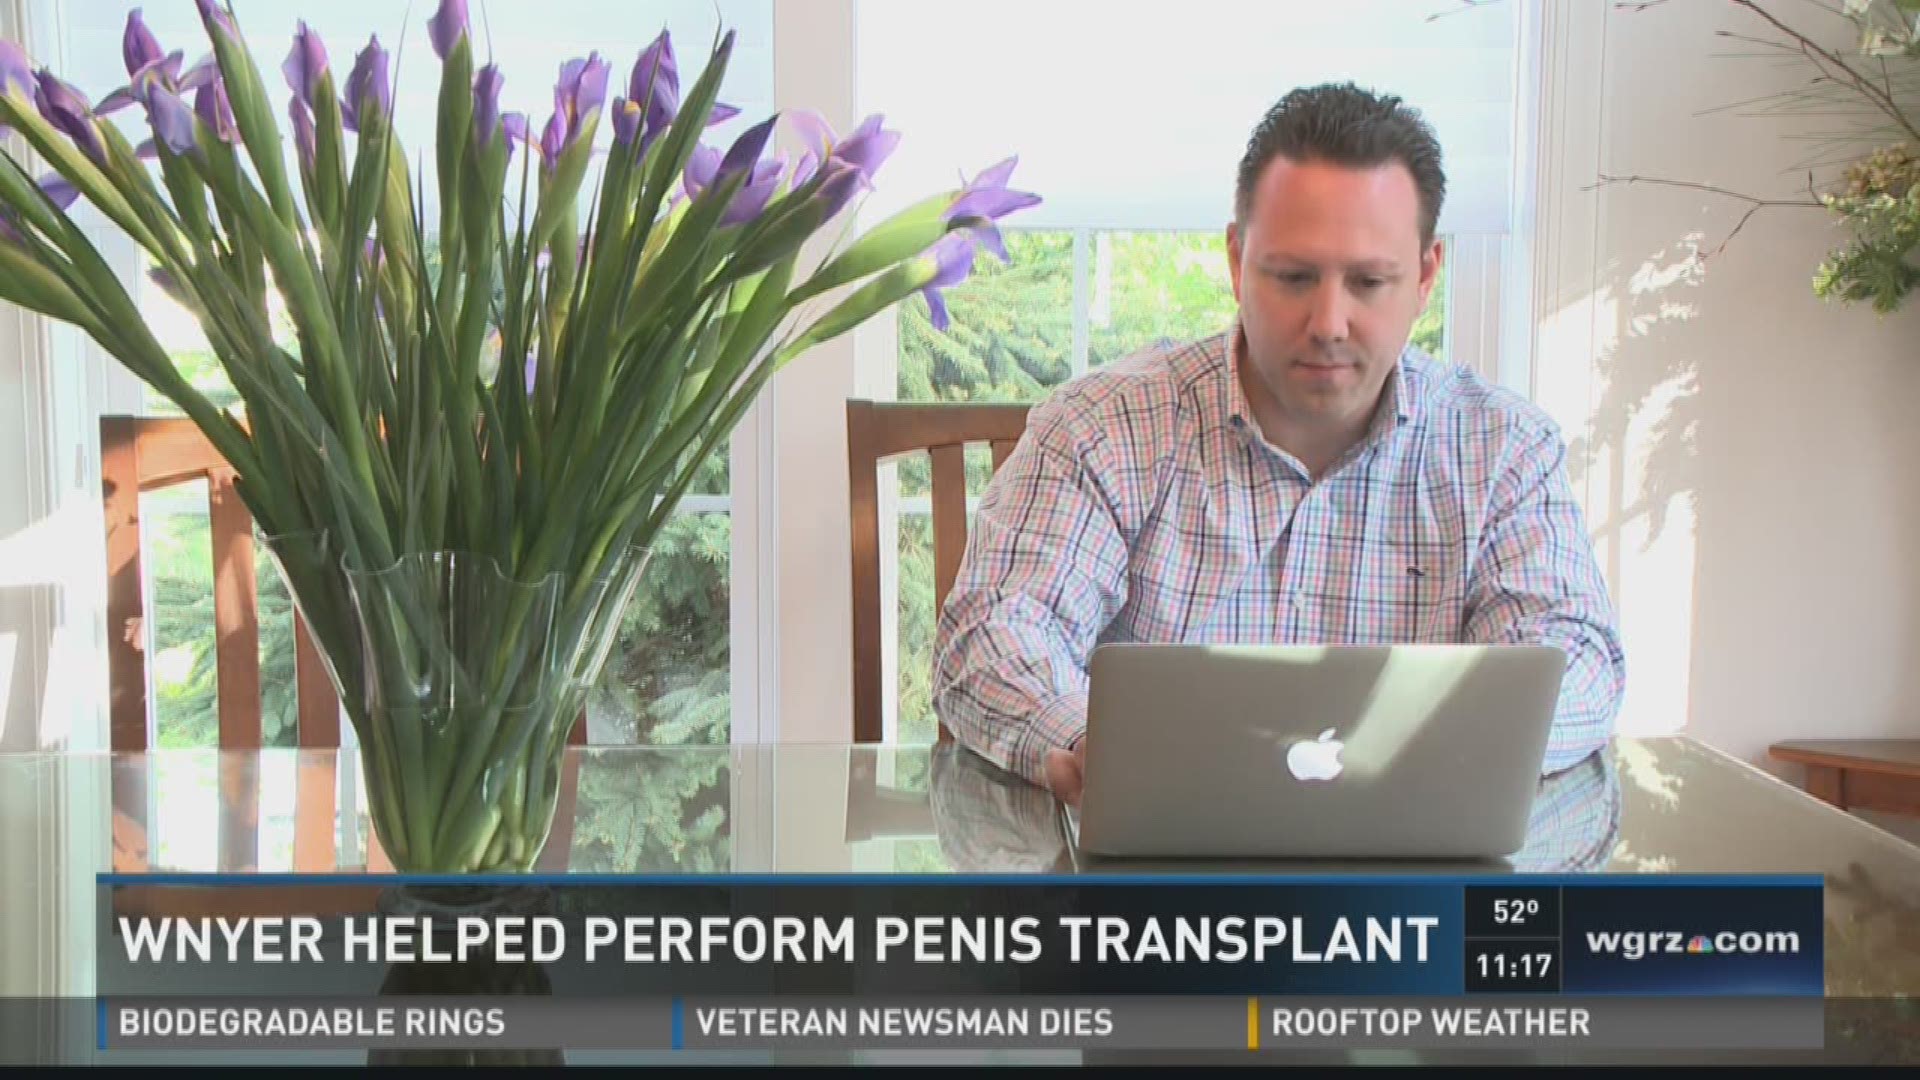 WNY native helped perform penis transplant